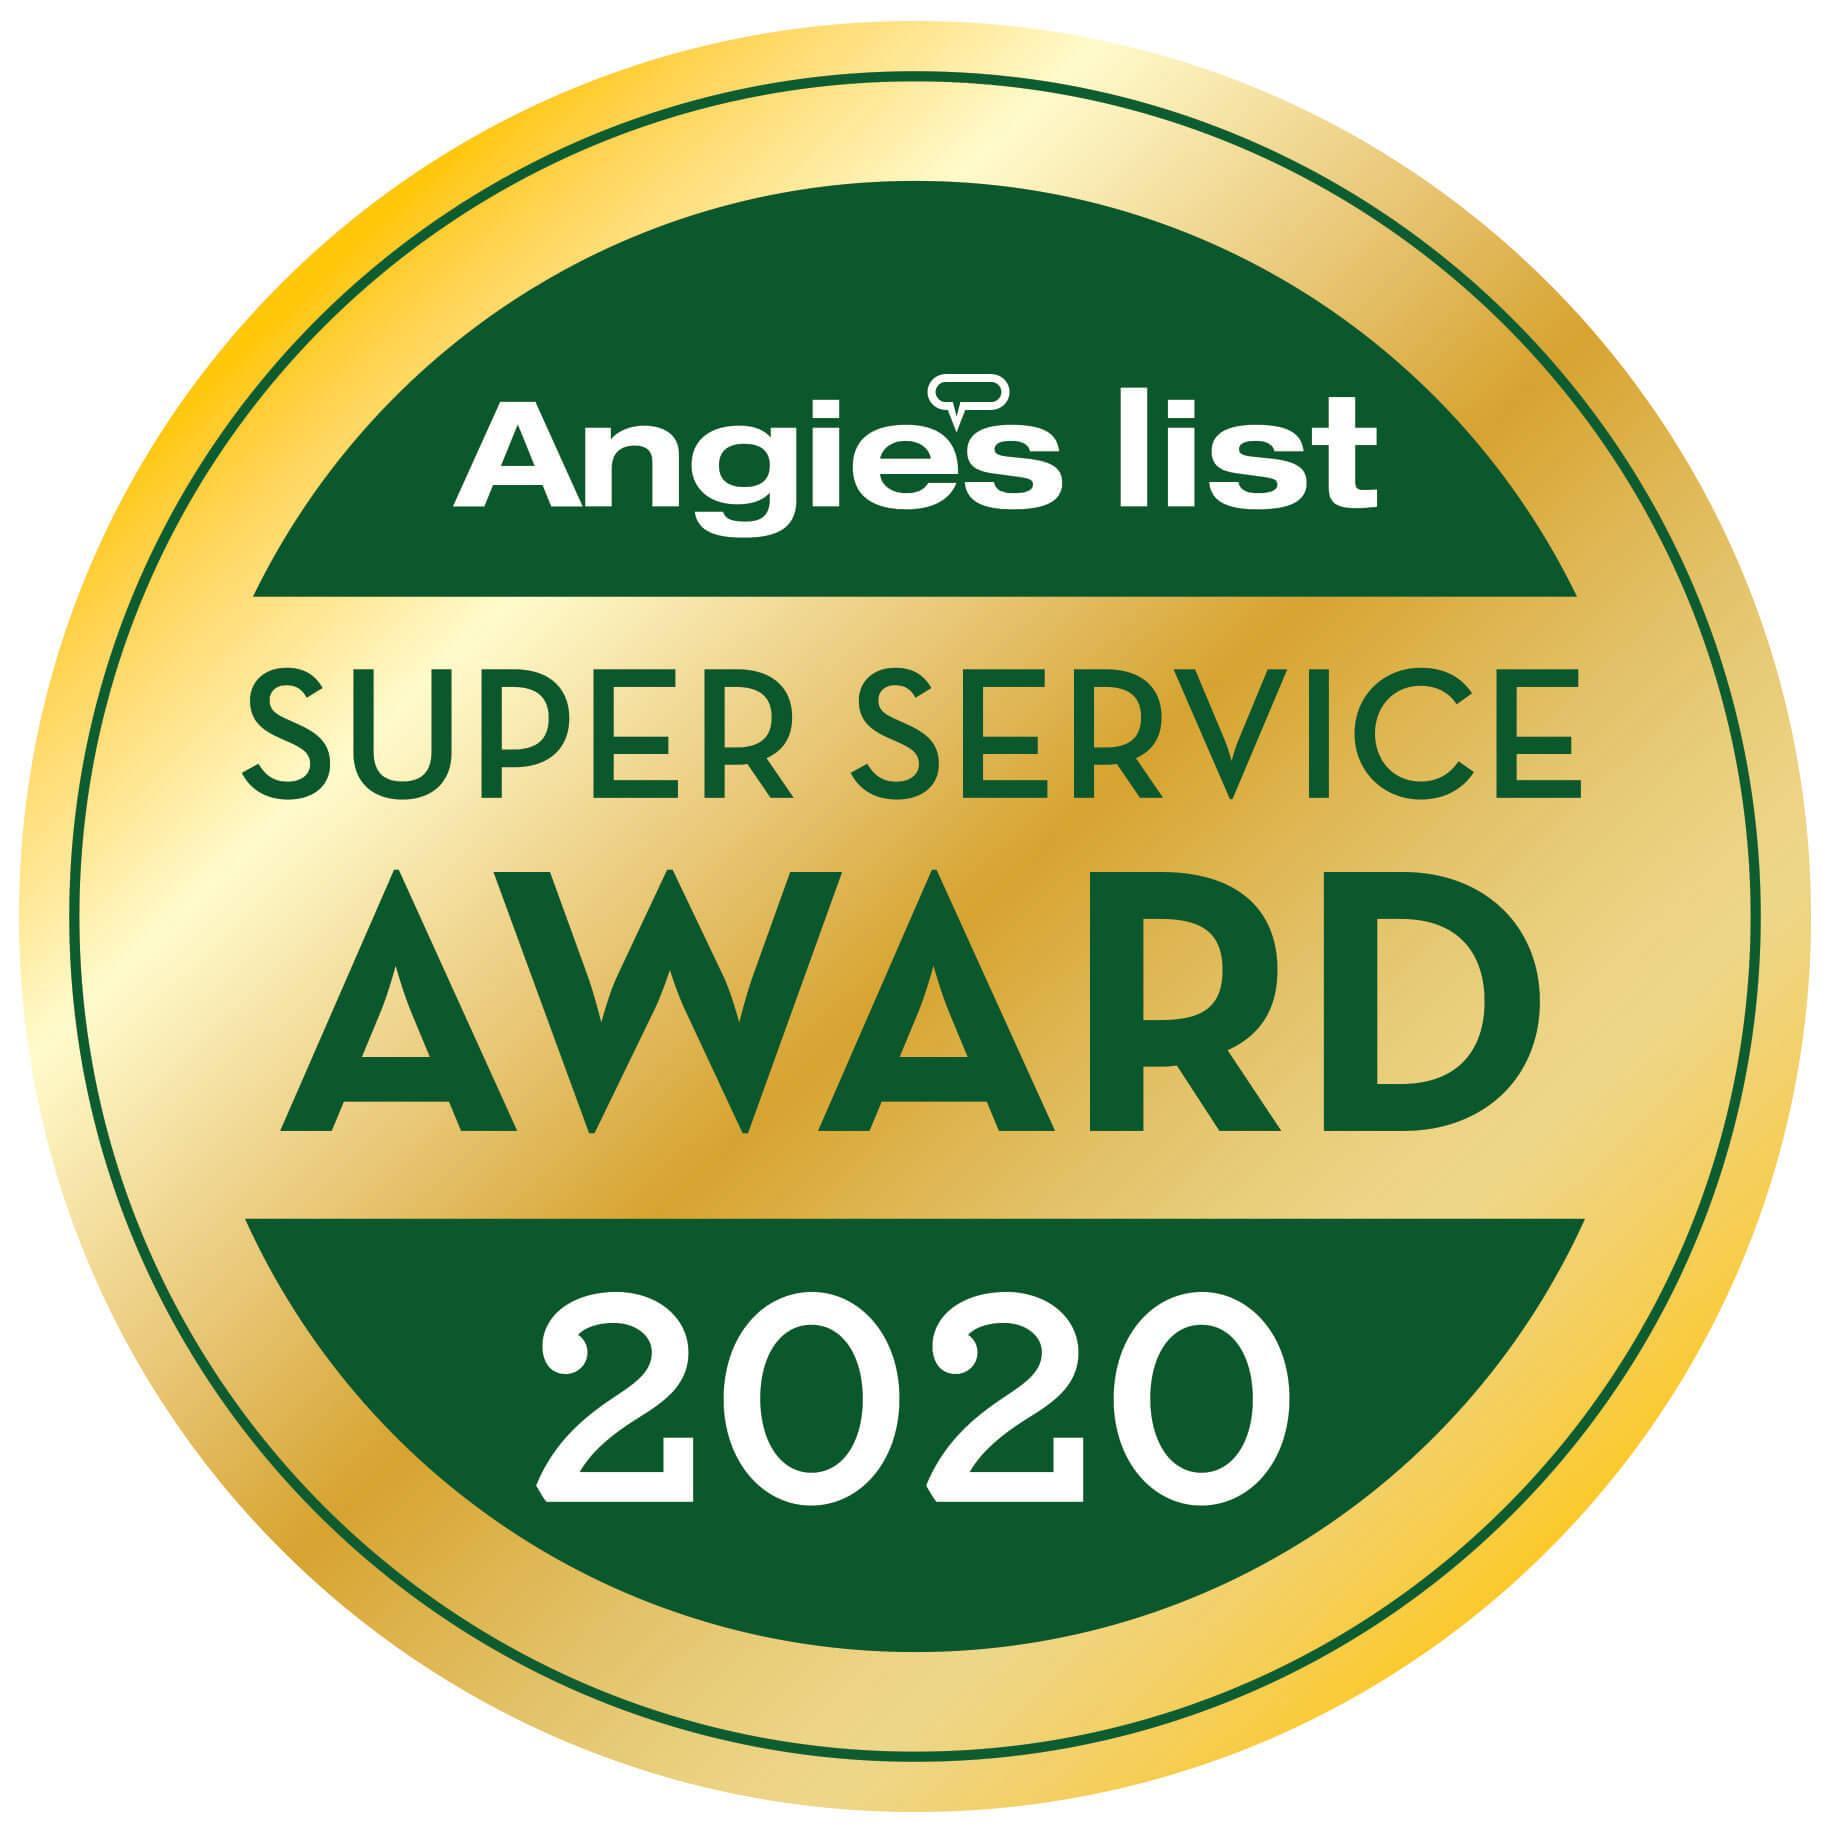 angies-list-super-service-award-winner-in-Berlin